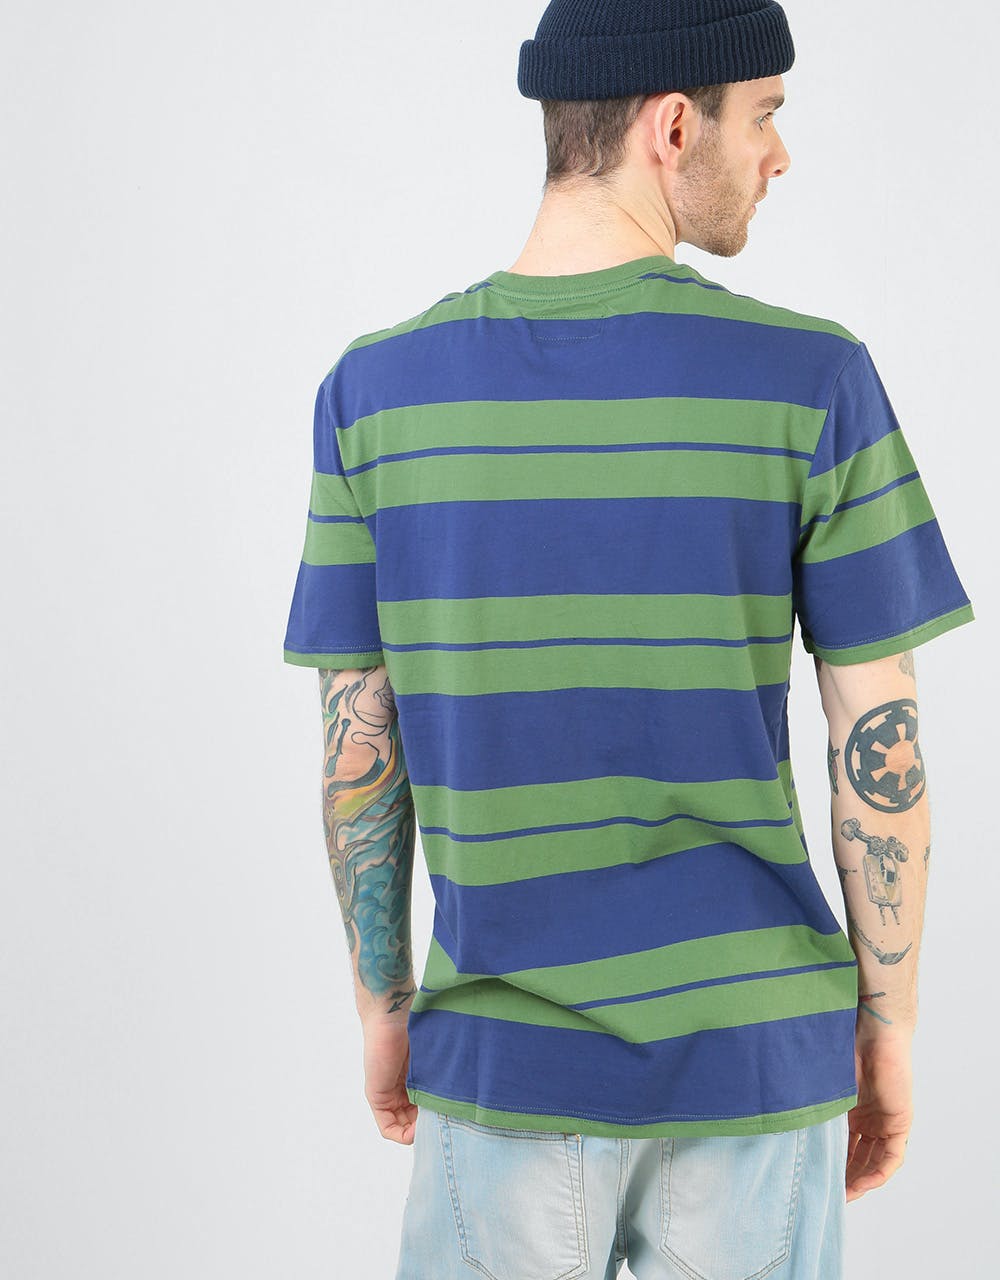 Brixton Hilt Pocket T-Shirt - Leaf/Patriot Blue